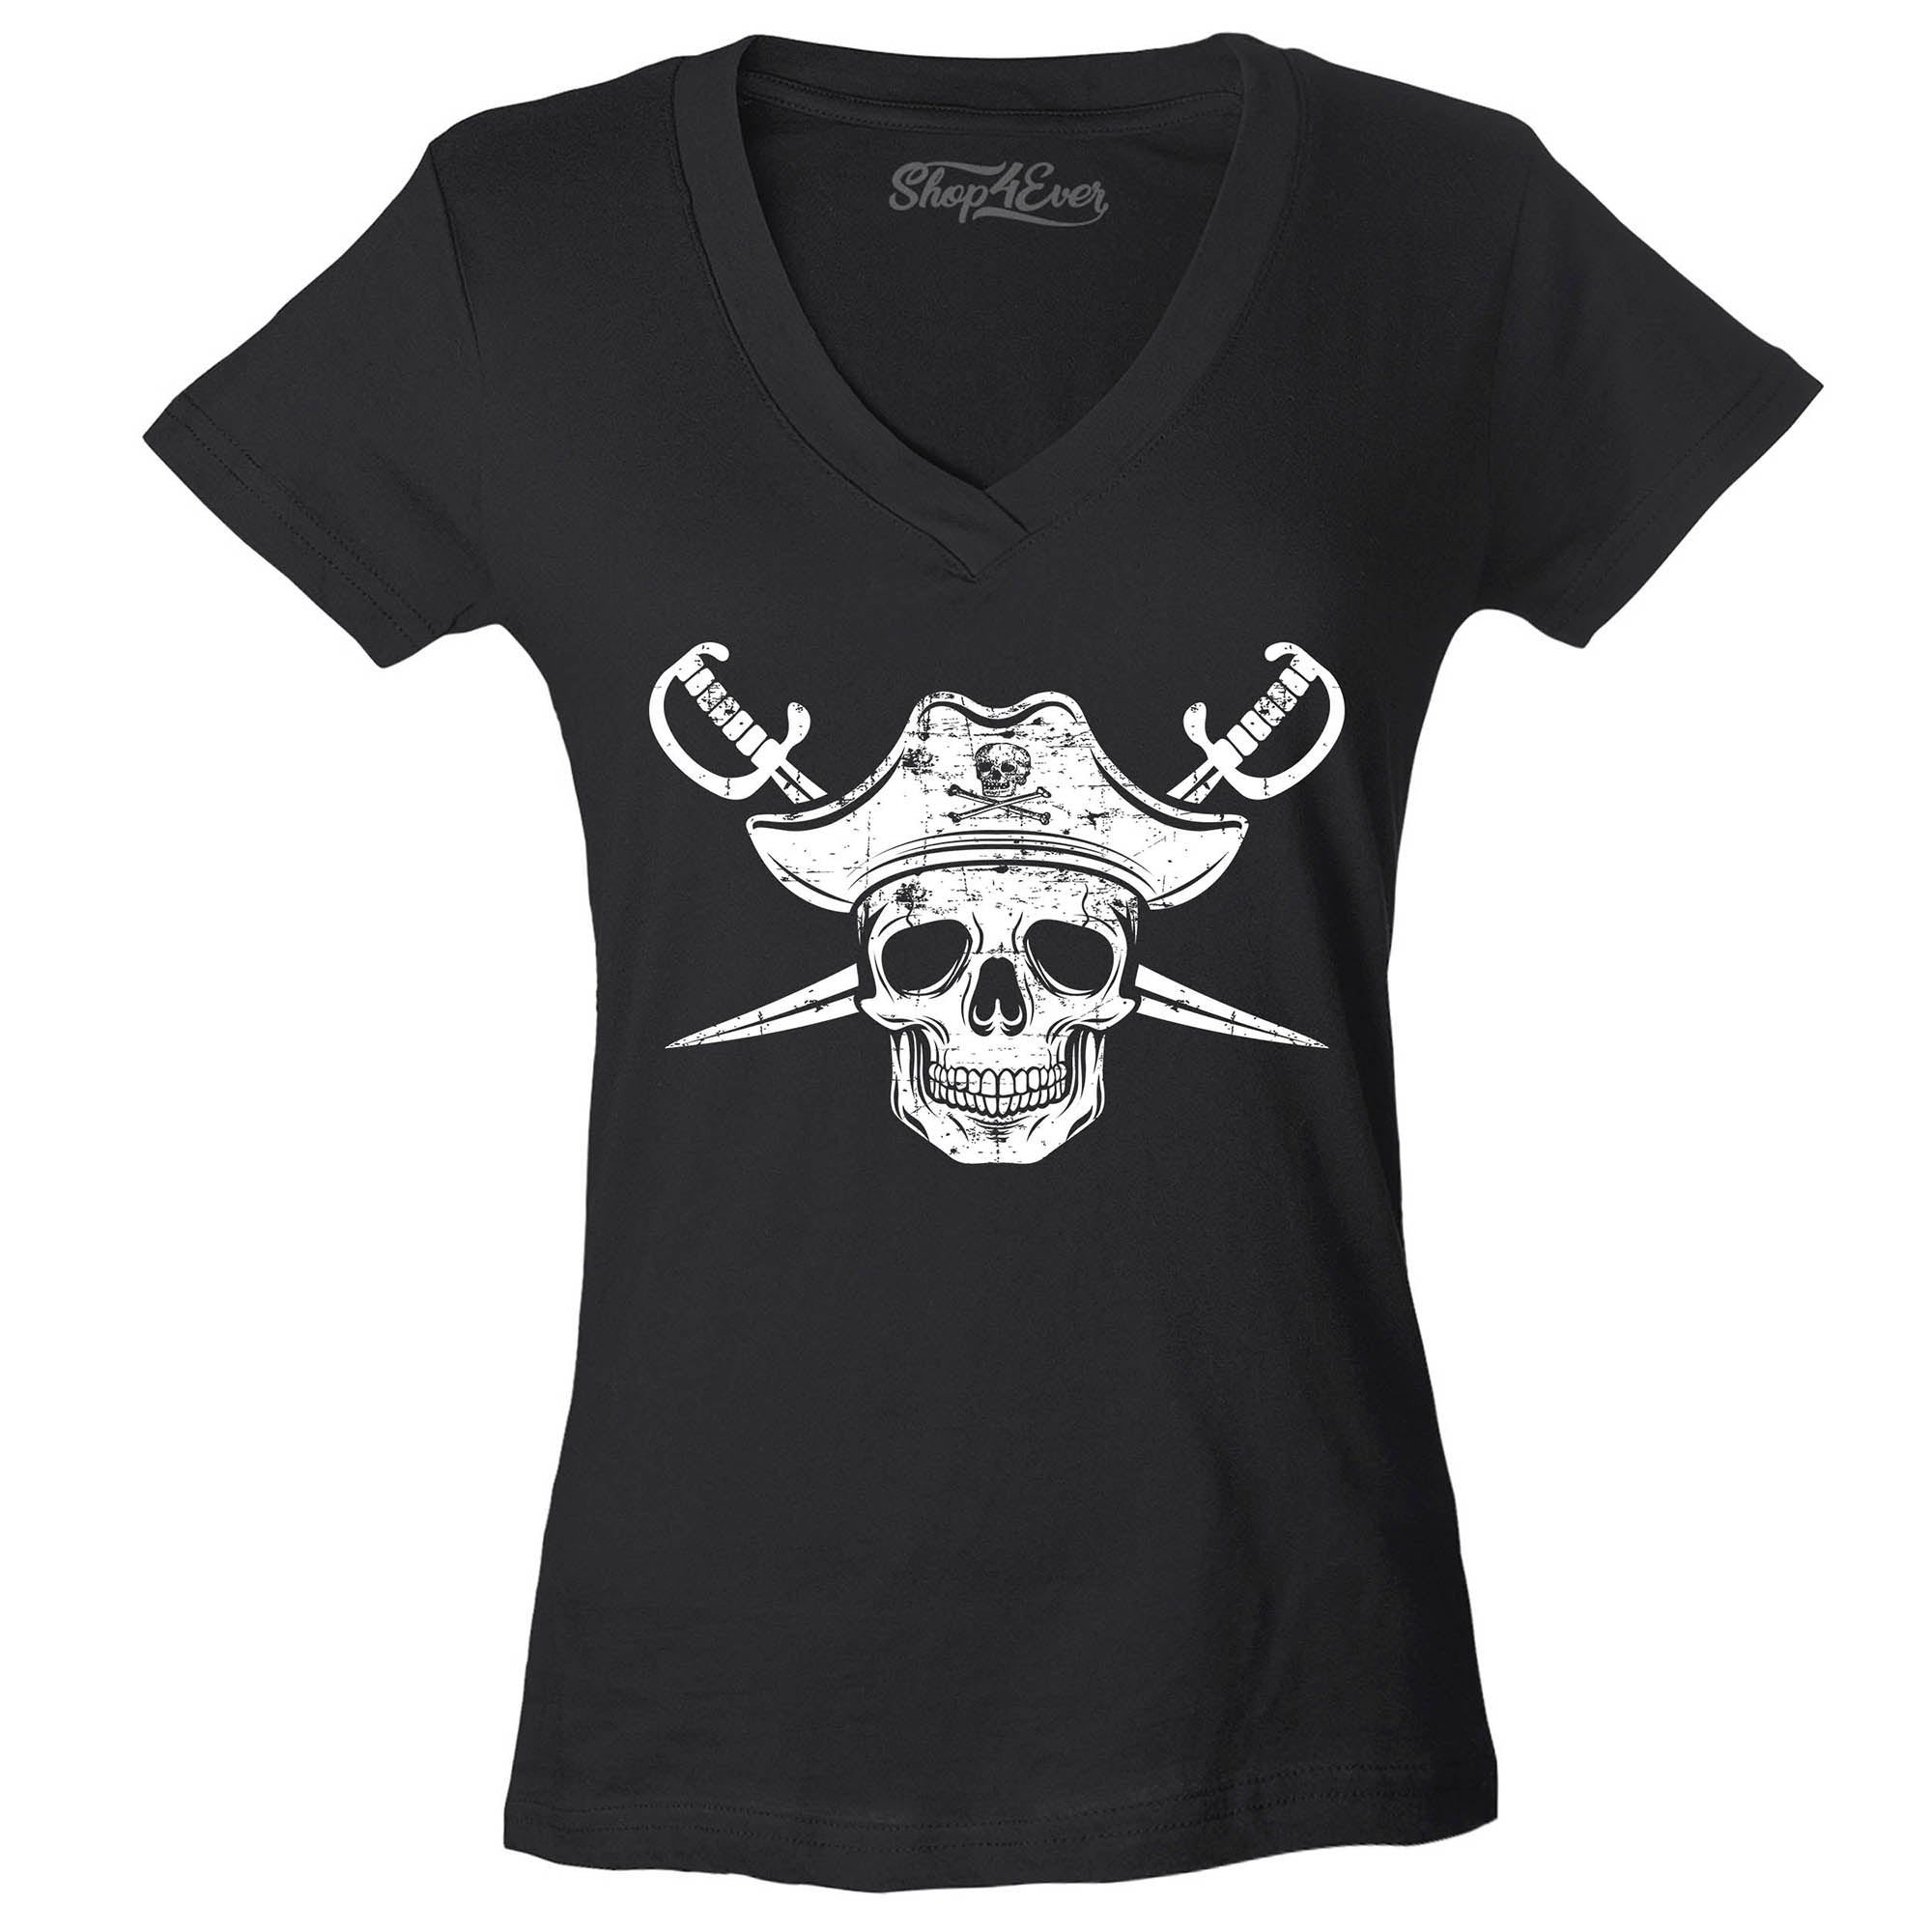 White Pirate Captain Skull with Scimitars Women's V-Neck T-Shirt Slim Fit